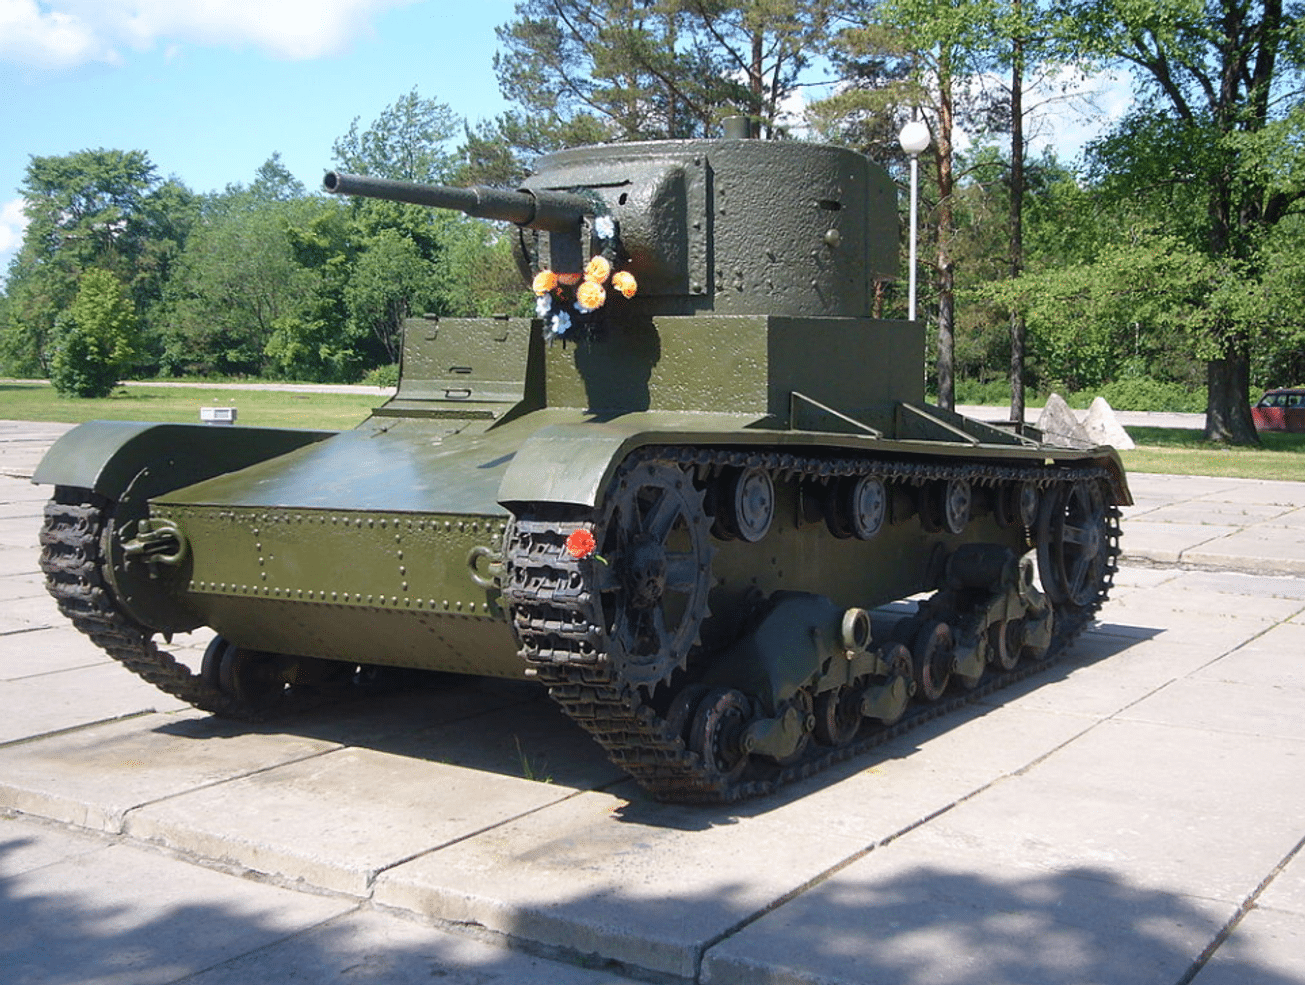 world war 2 tank battles: the famous tank battles that defined wwii.